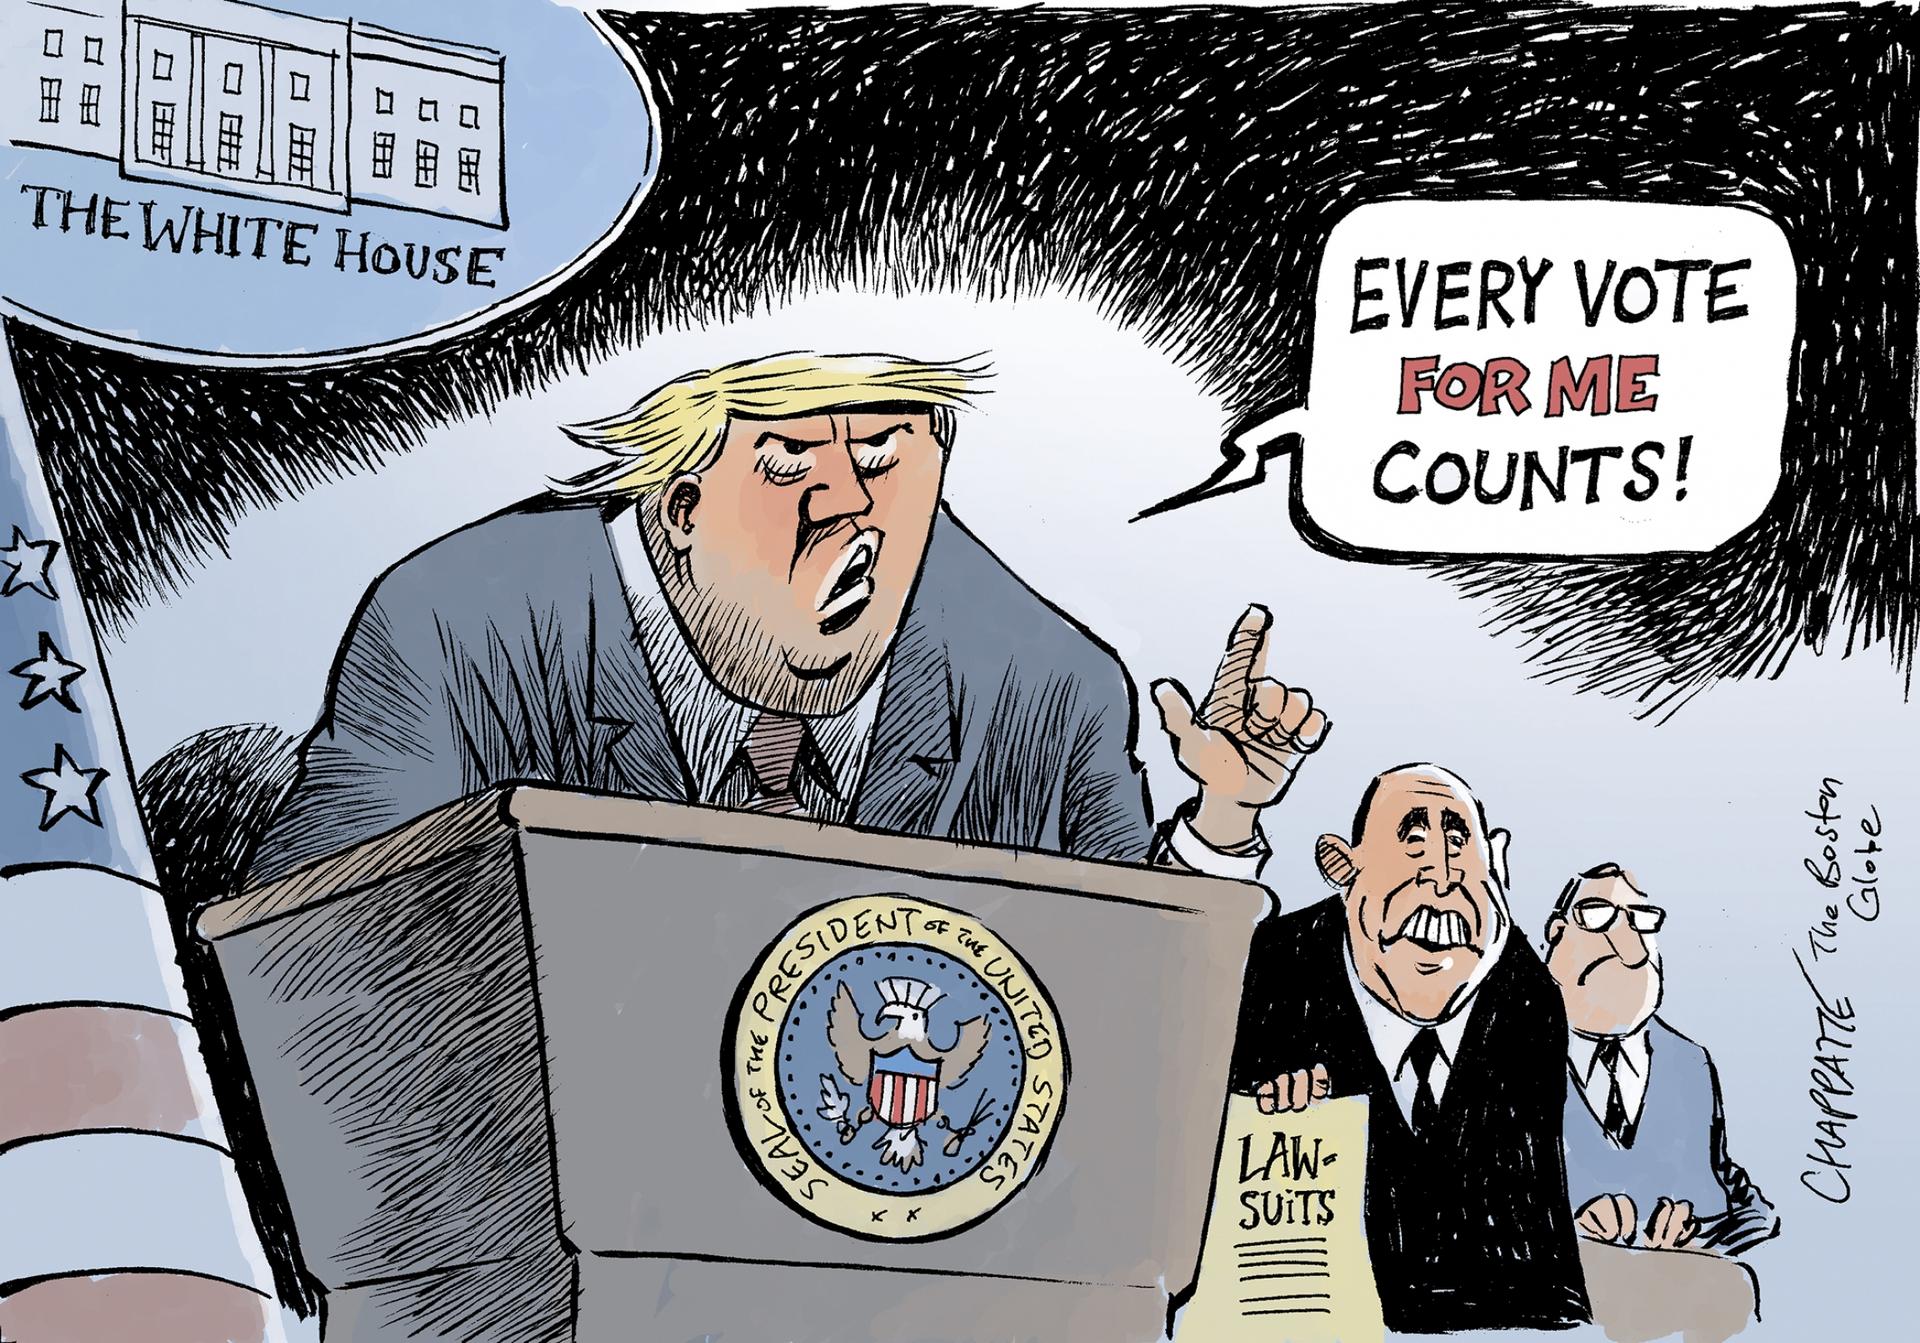 "Trump gets desperate," by Patrick Chappatte, Switzerland via caglecartoons.com